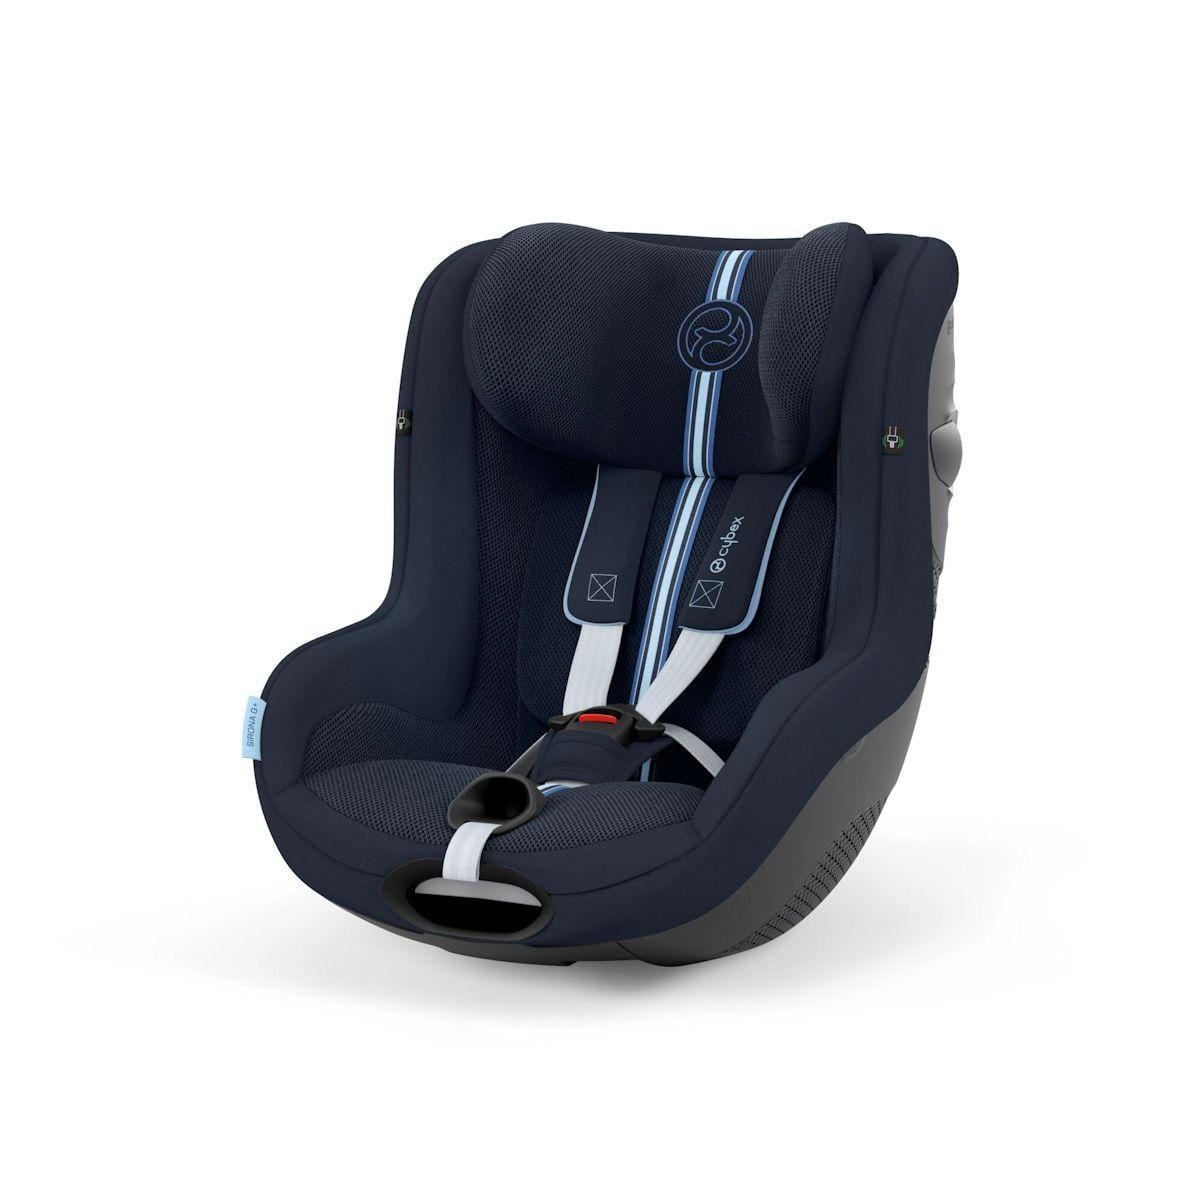 Cybex baby car seats Cybex G PLUS i-Size Car Seat Bundle - Ocean Blue 15302-OCE-BLU